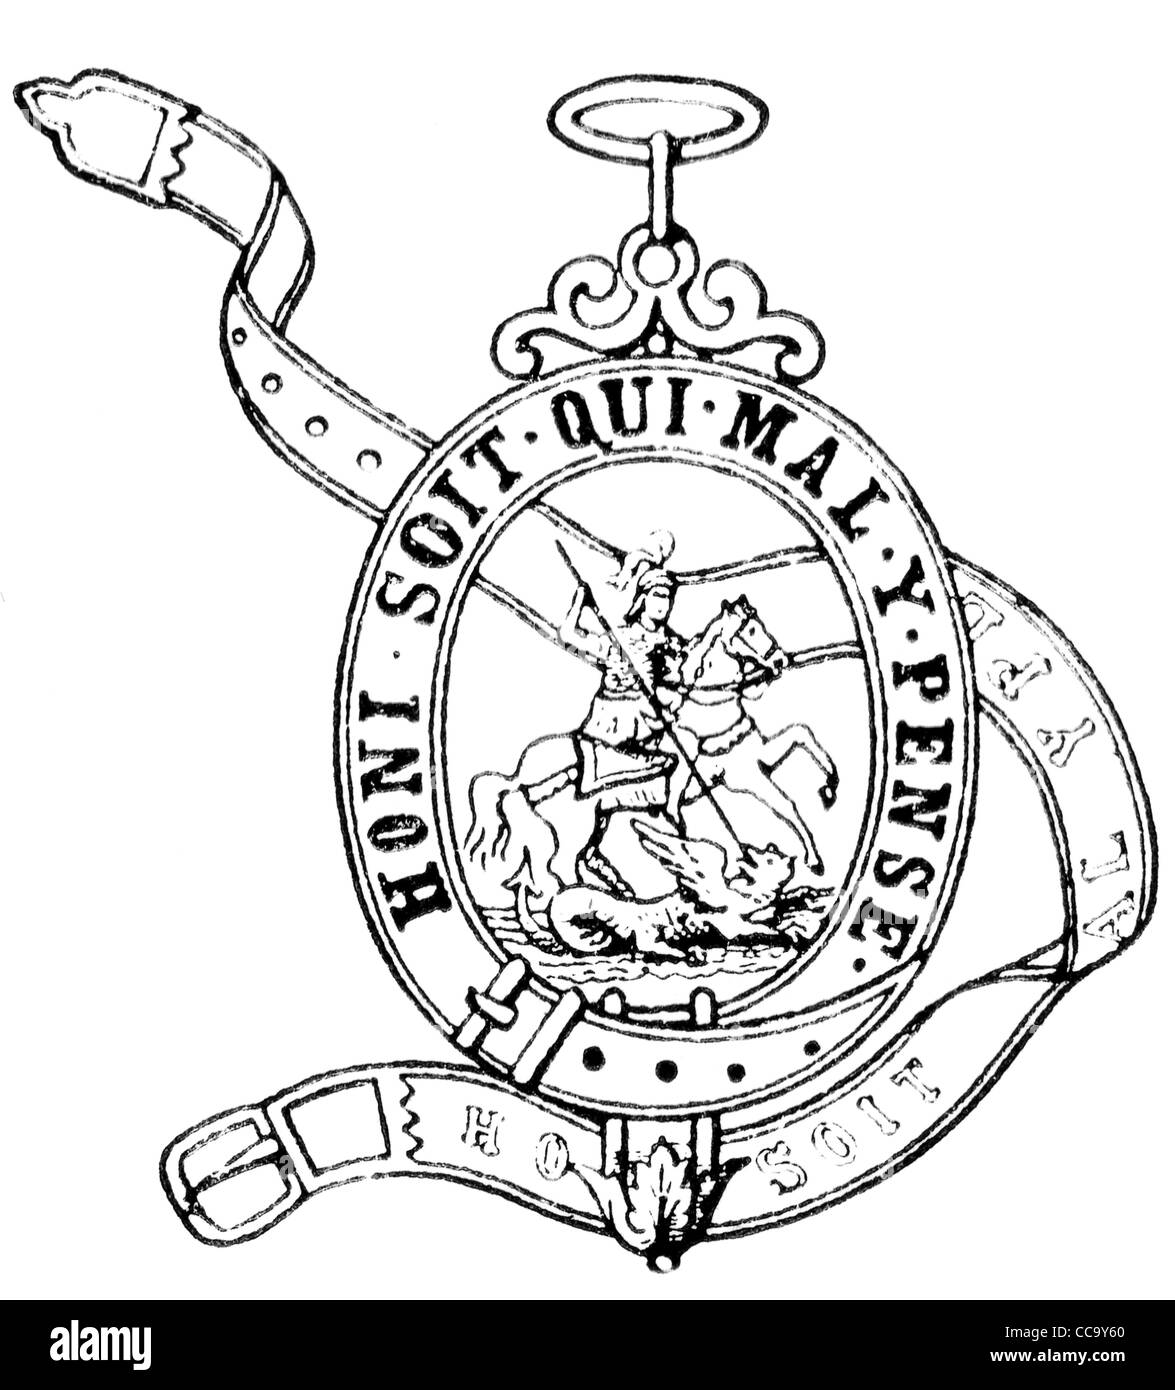 Die edelsten Order of the Garter (England, 1350). Stockfoto